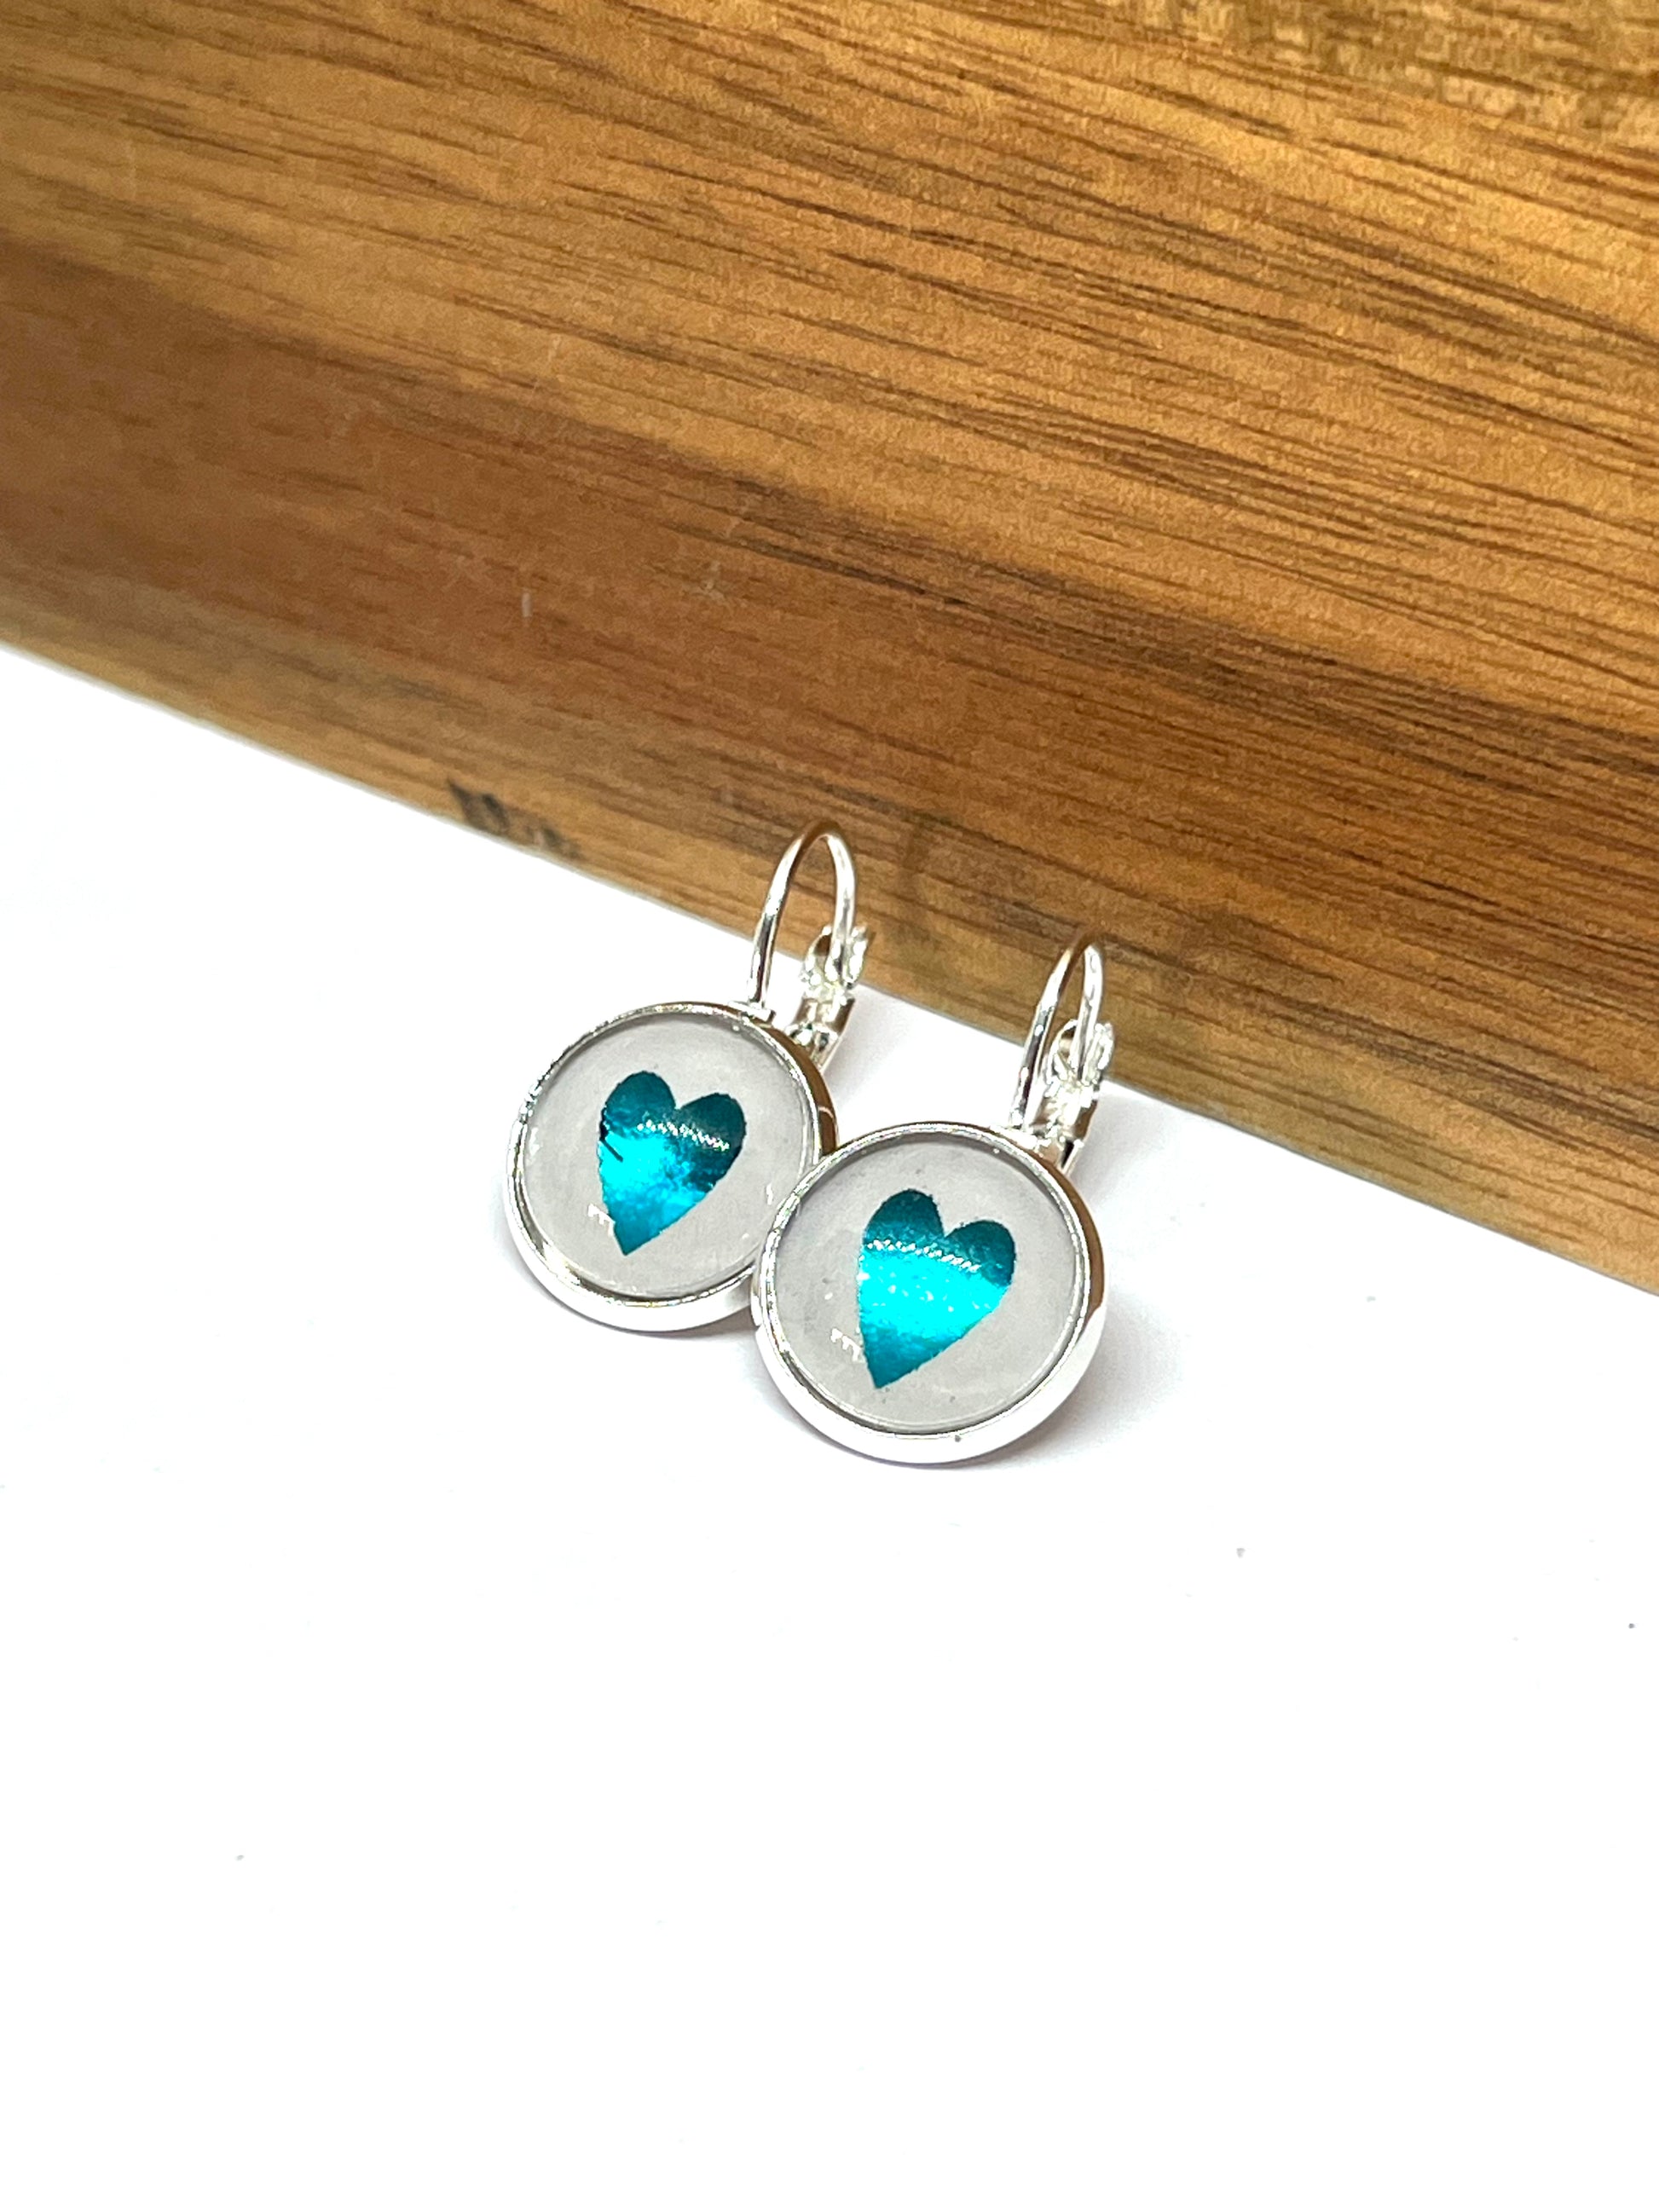 Pretty Aqua blue heart glass dome earrings in a silver setting